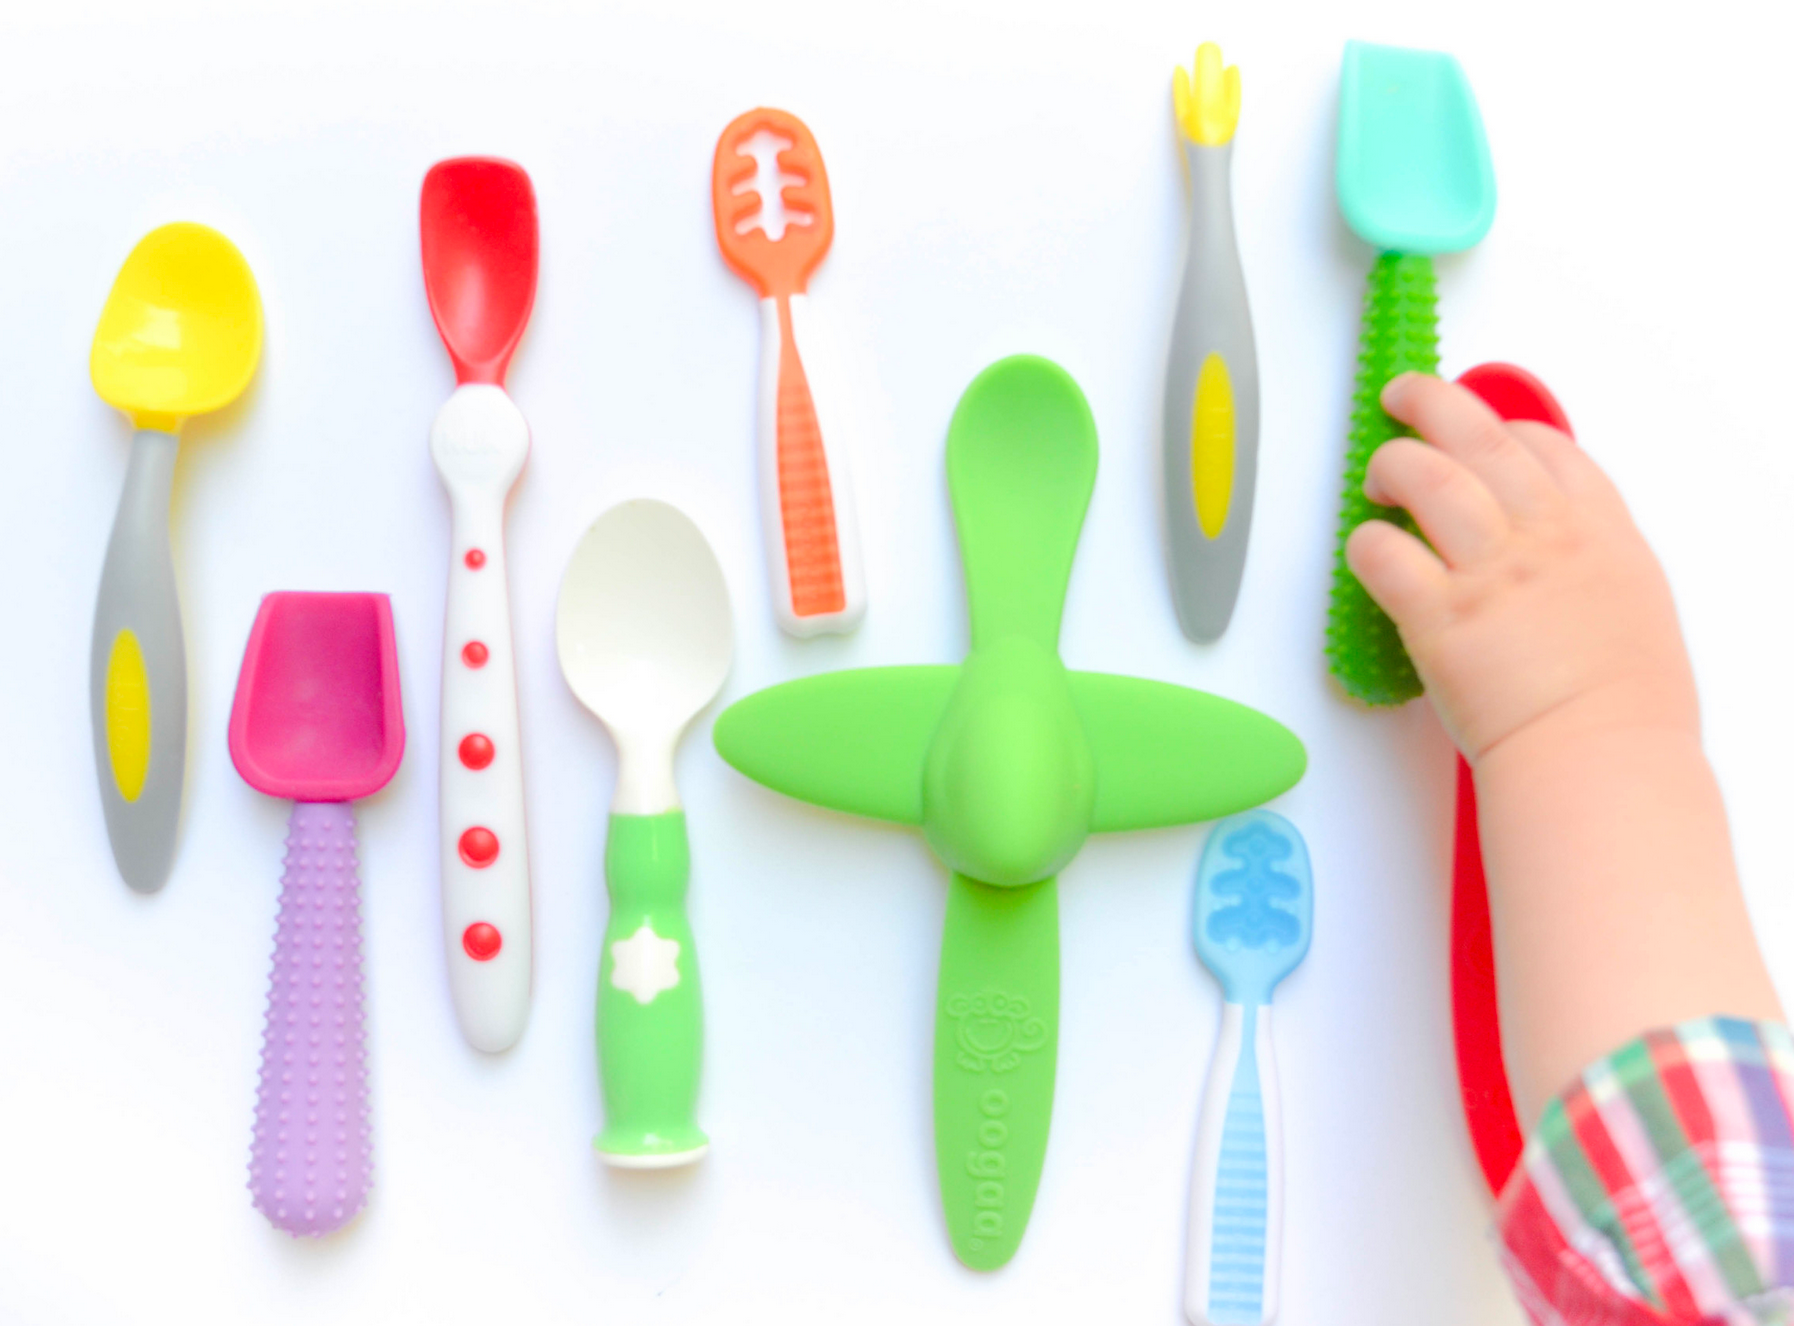 Baby Self Feeding Spoons and Beginner Bowls : NumNum®